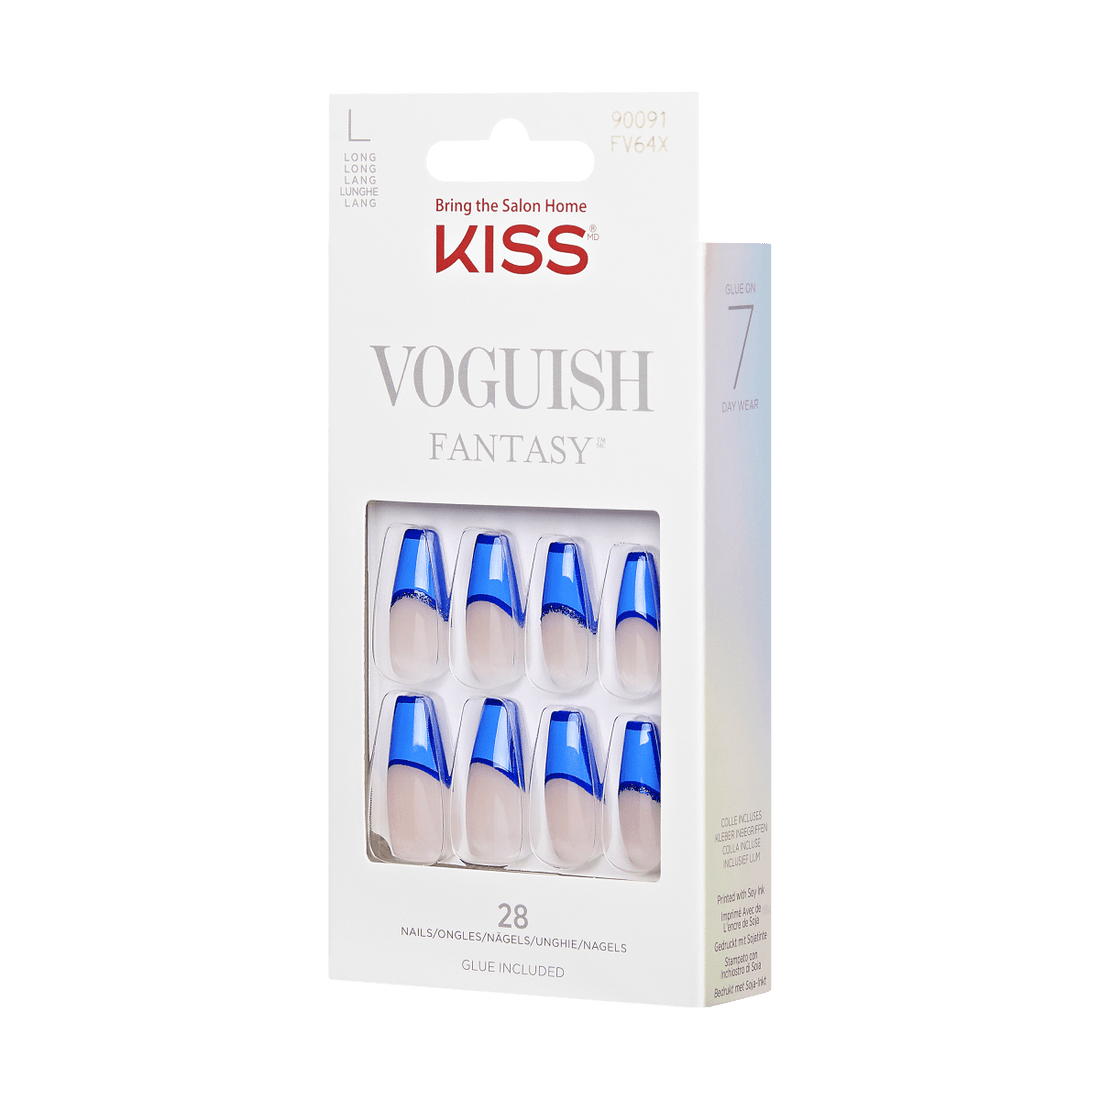 KISS Voguish Fantasy Nails - Popsicle